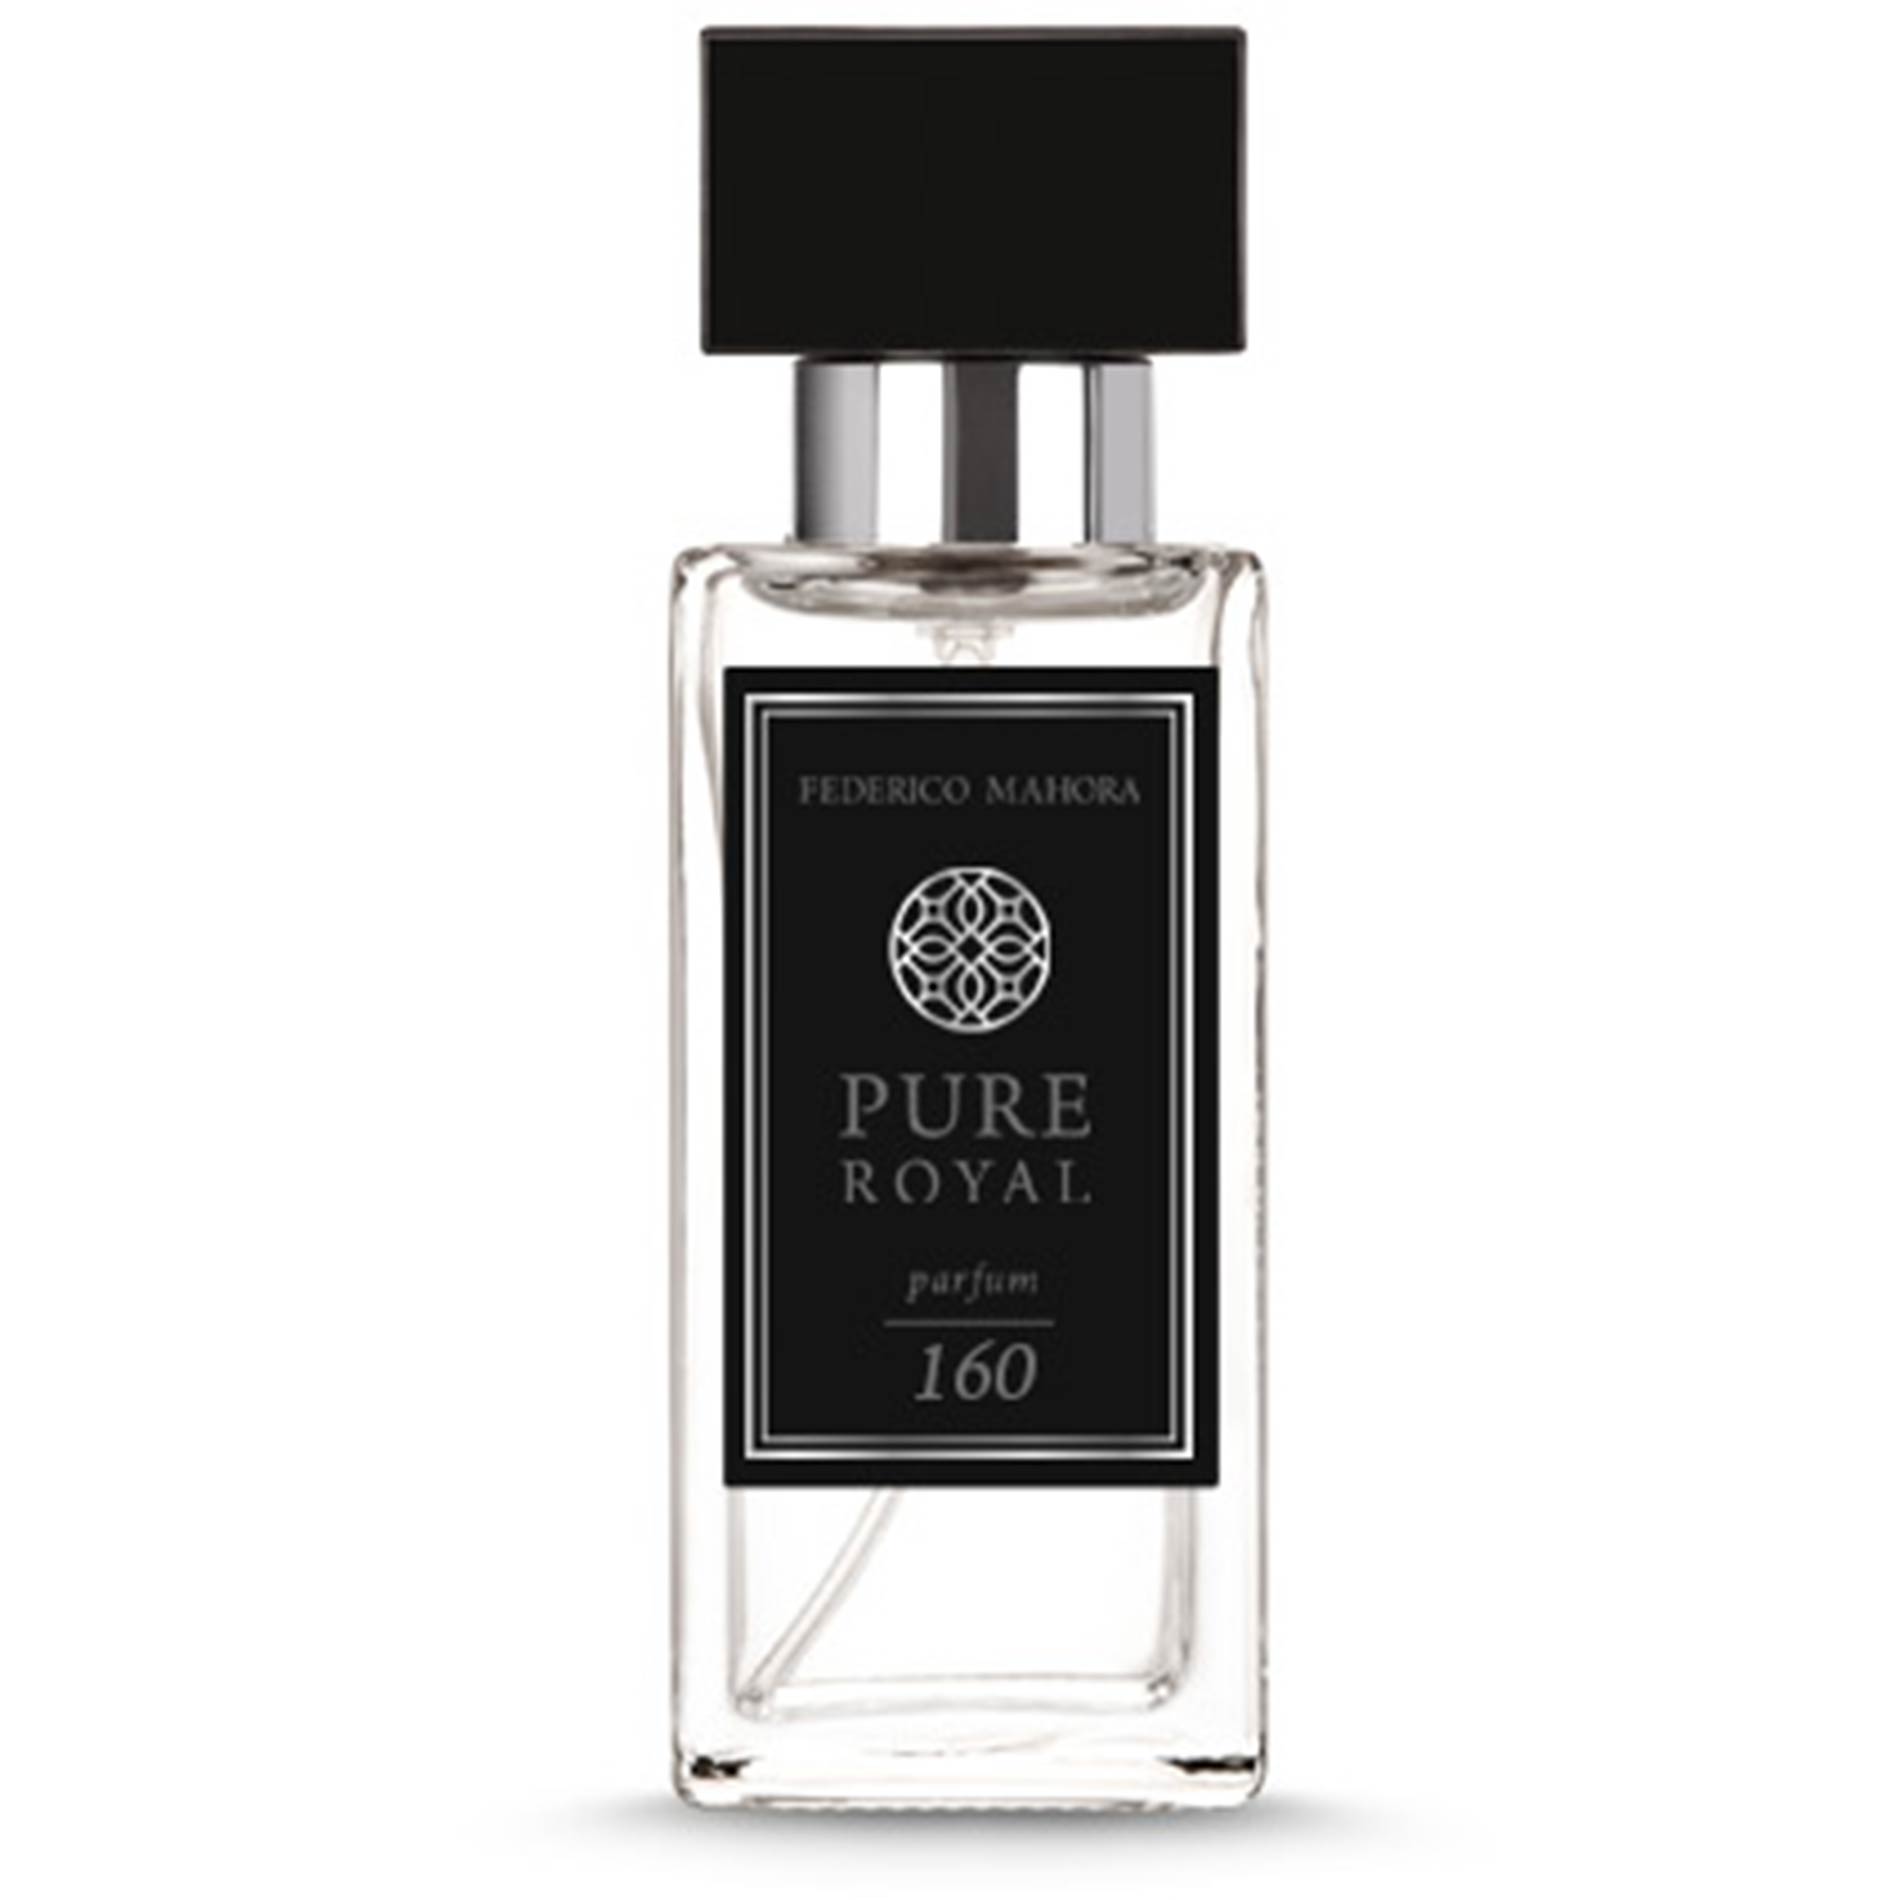 PURE ROYAL 160 Parfum by Federico Mahora 